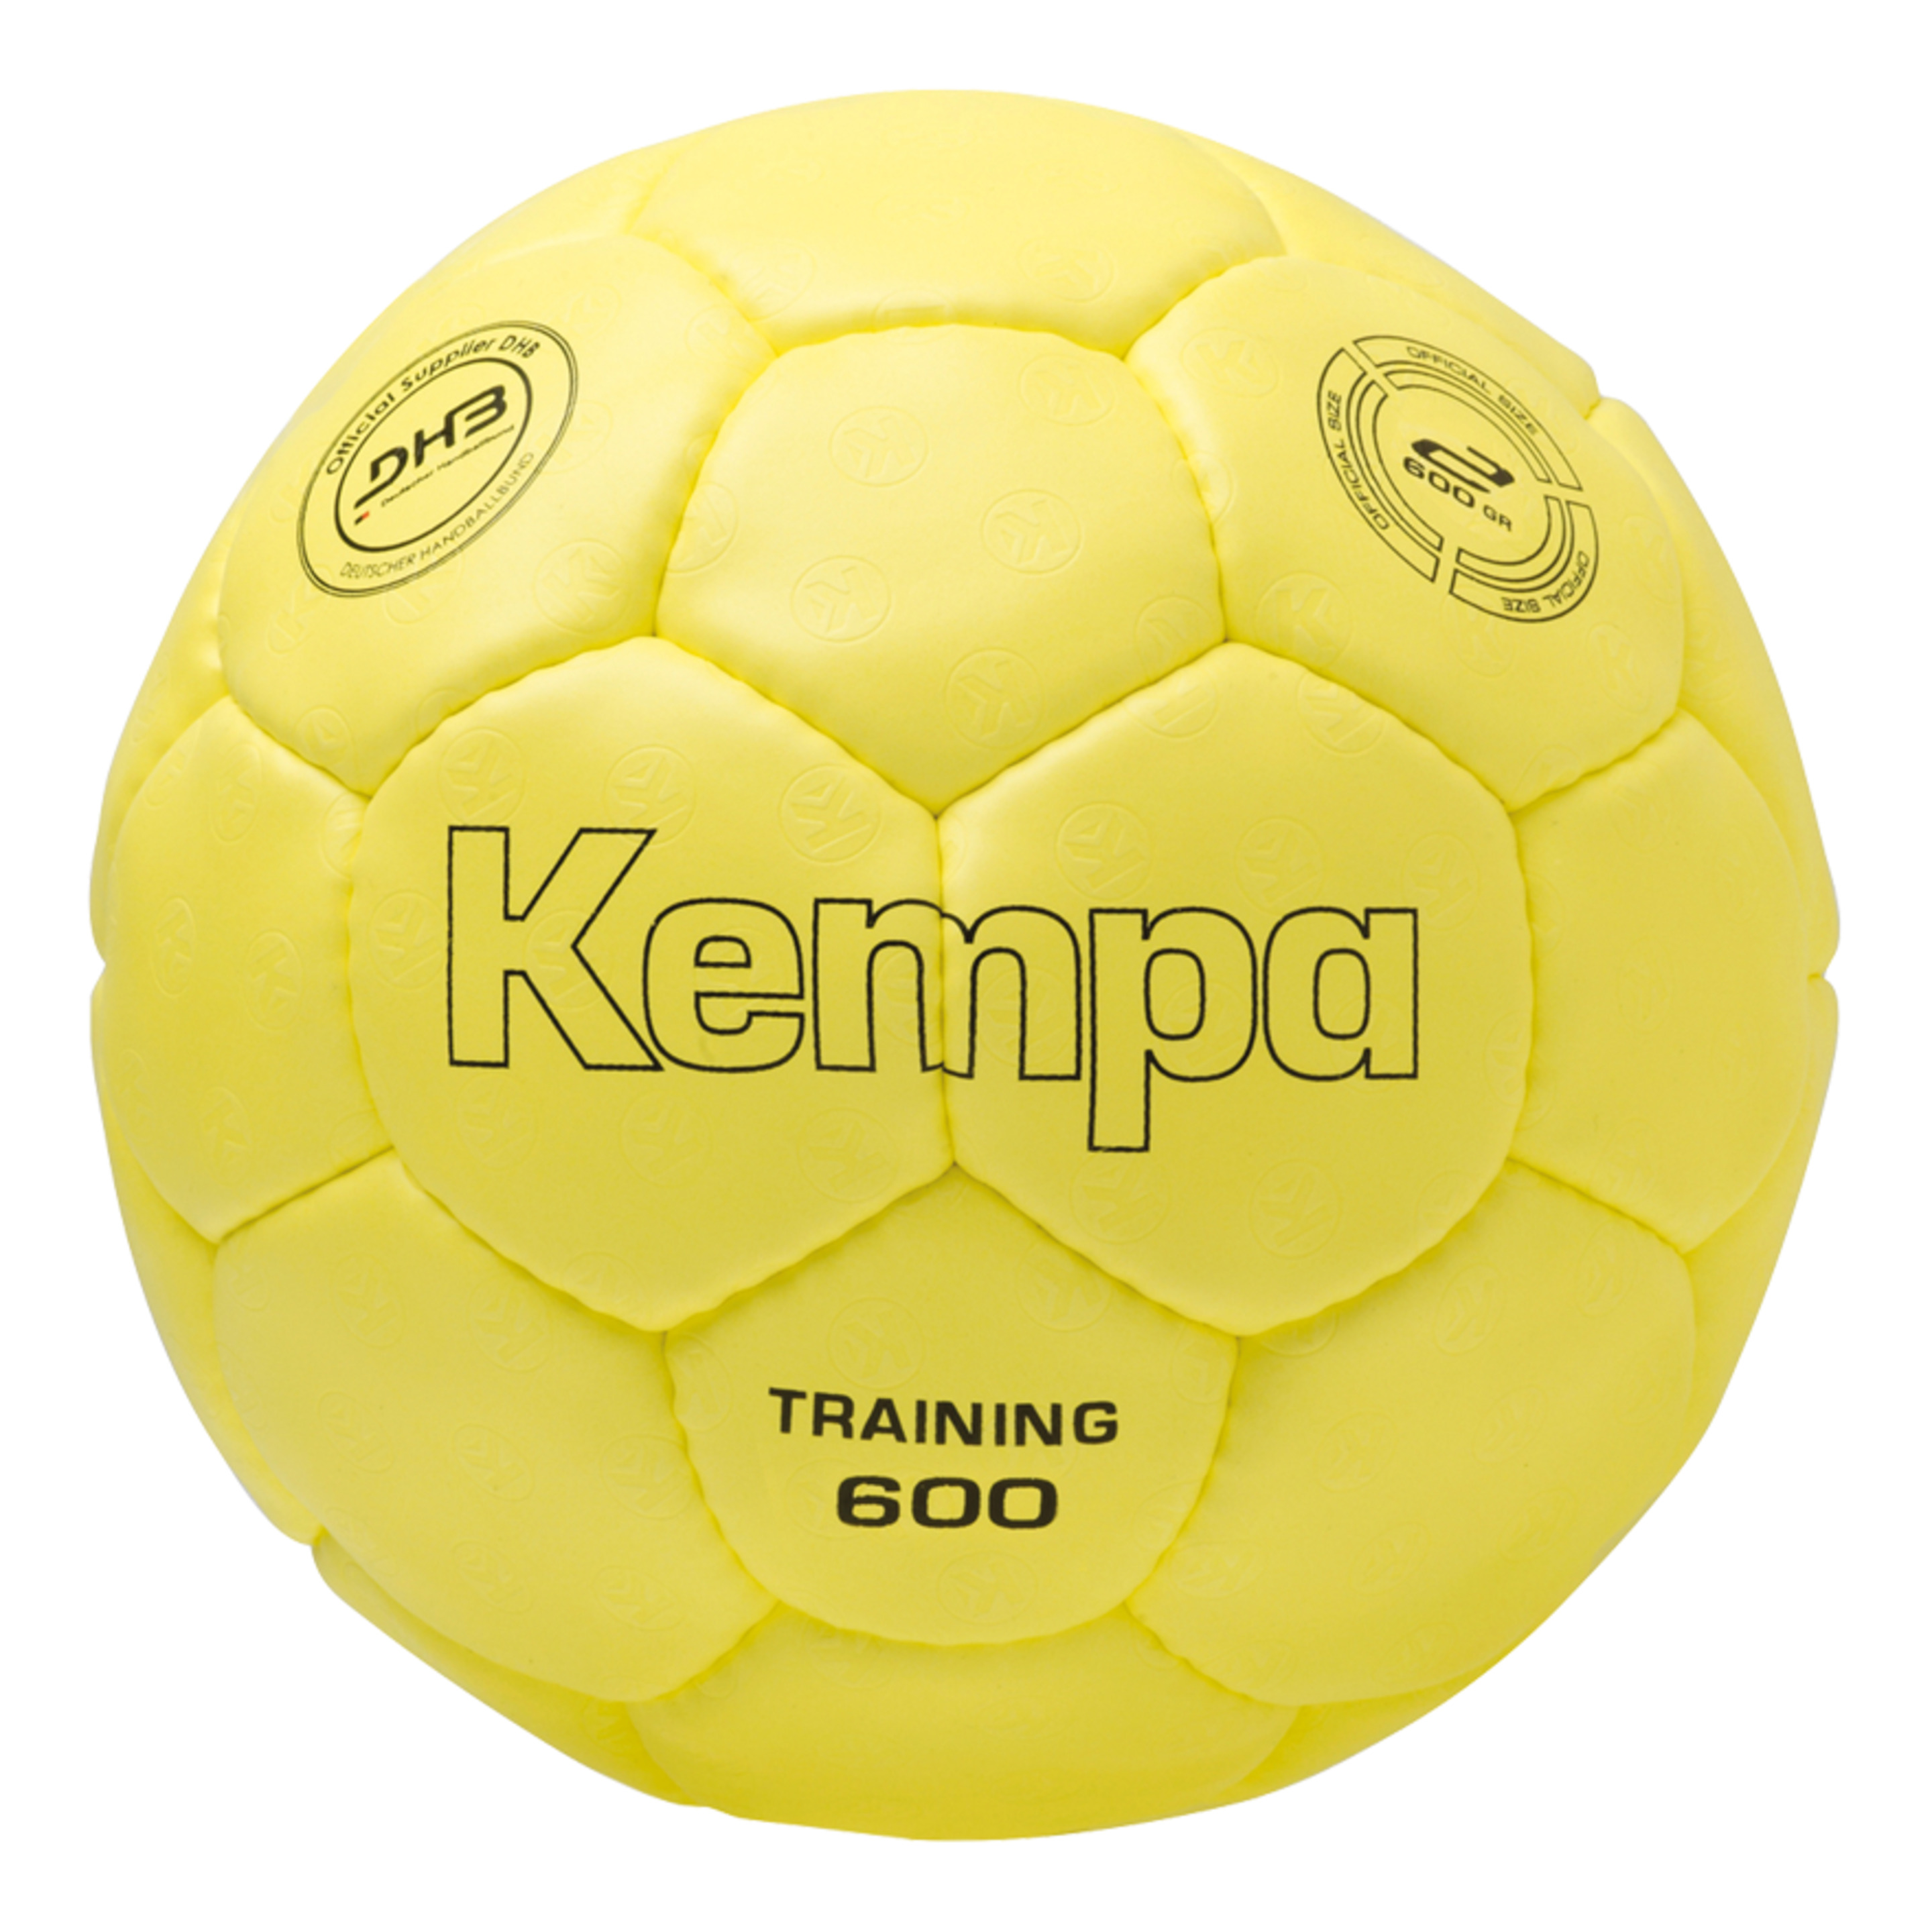 Training 600 Amarillo Kempa